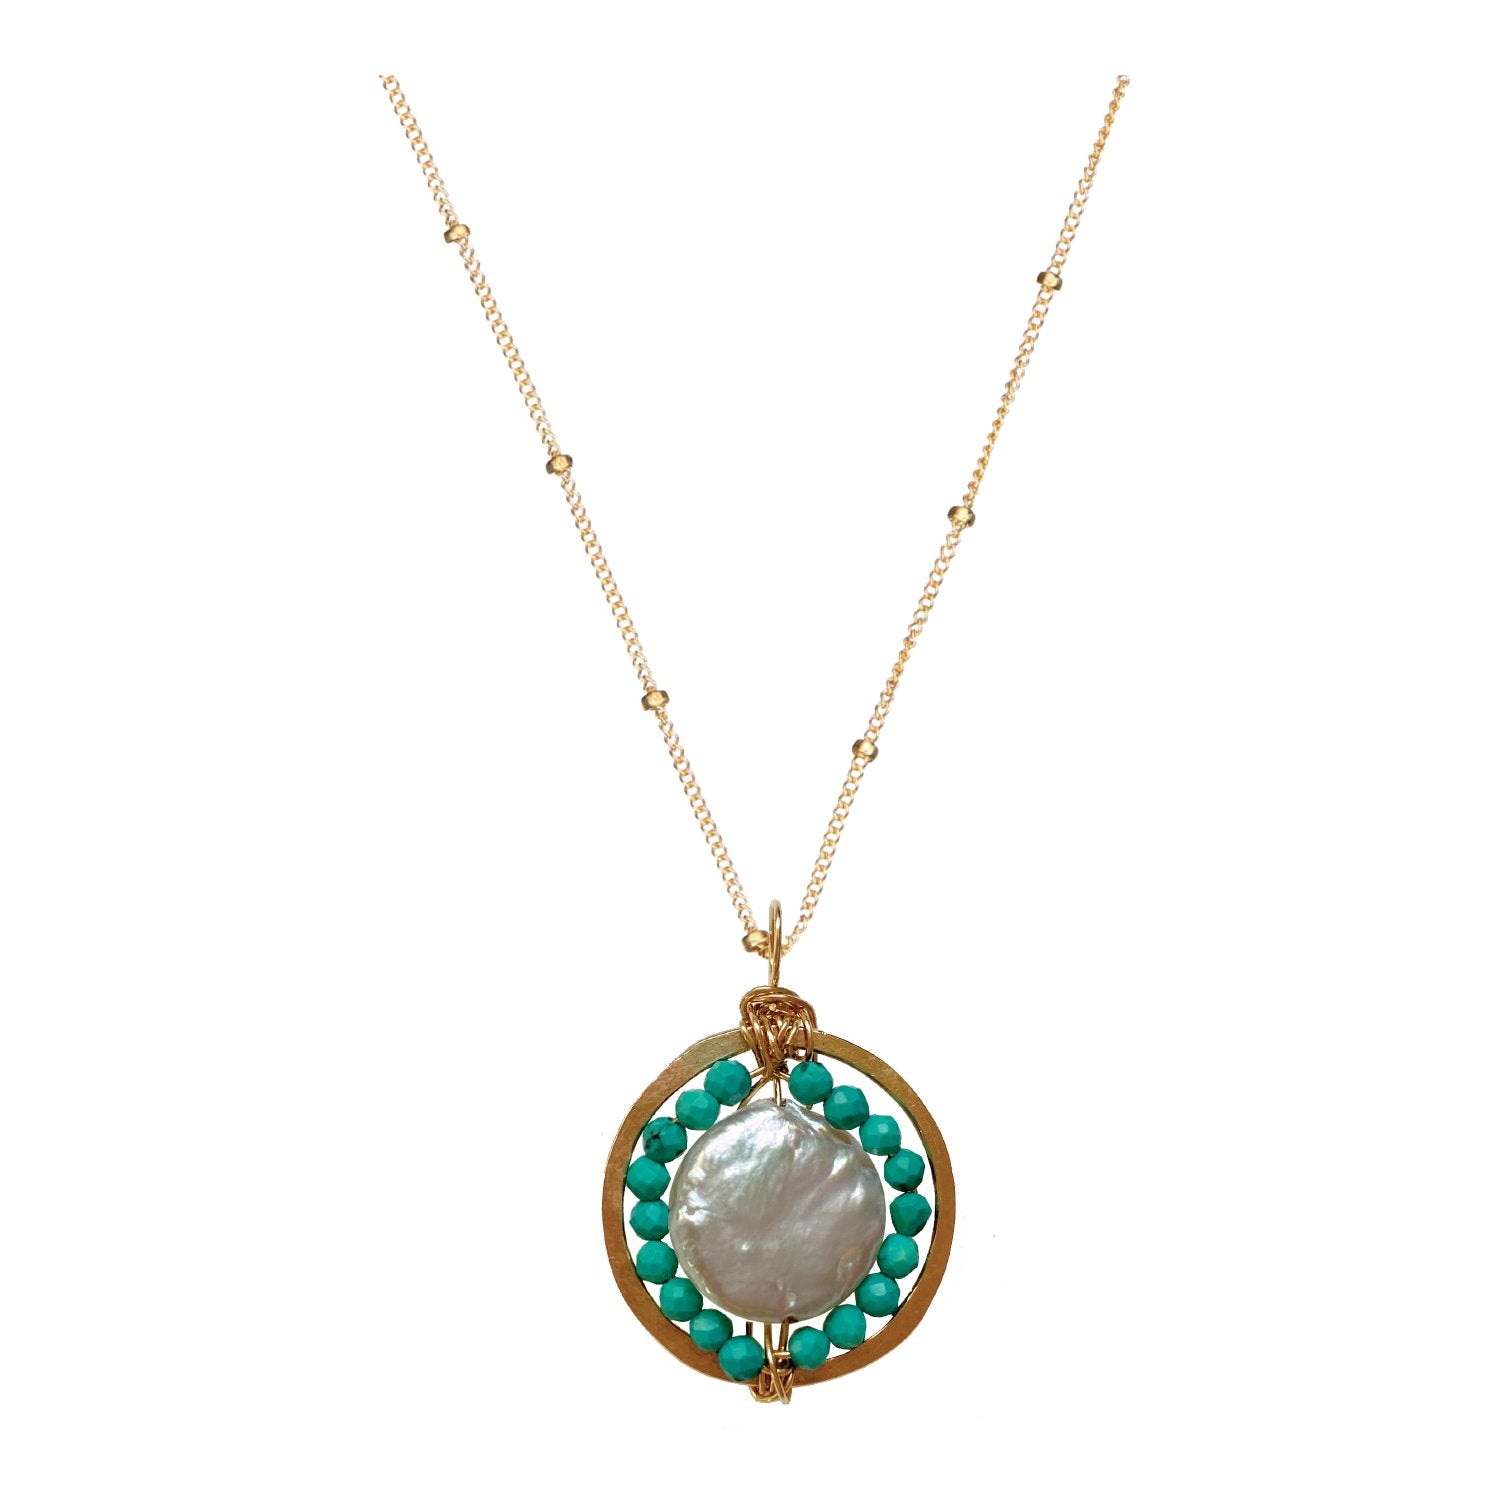 Gemstone Medallion Necklace - Turquoise Robyn Canady 